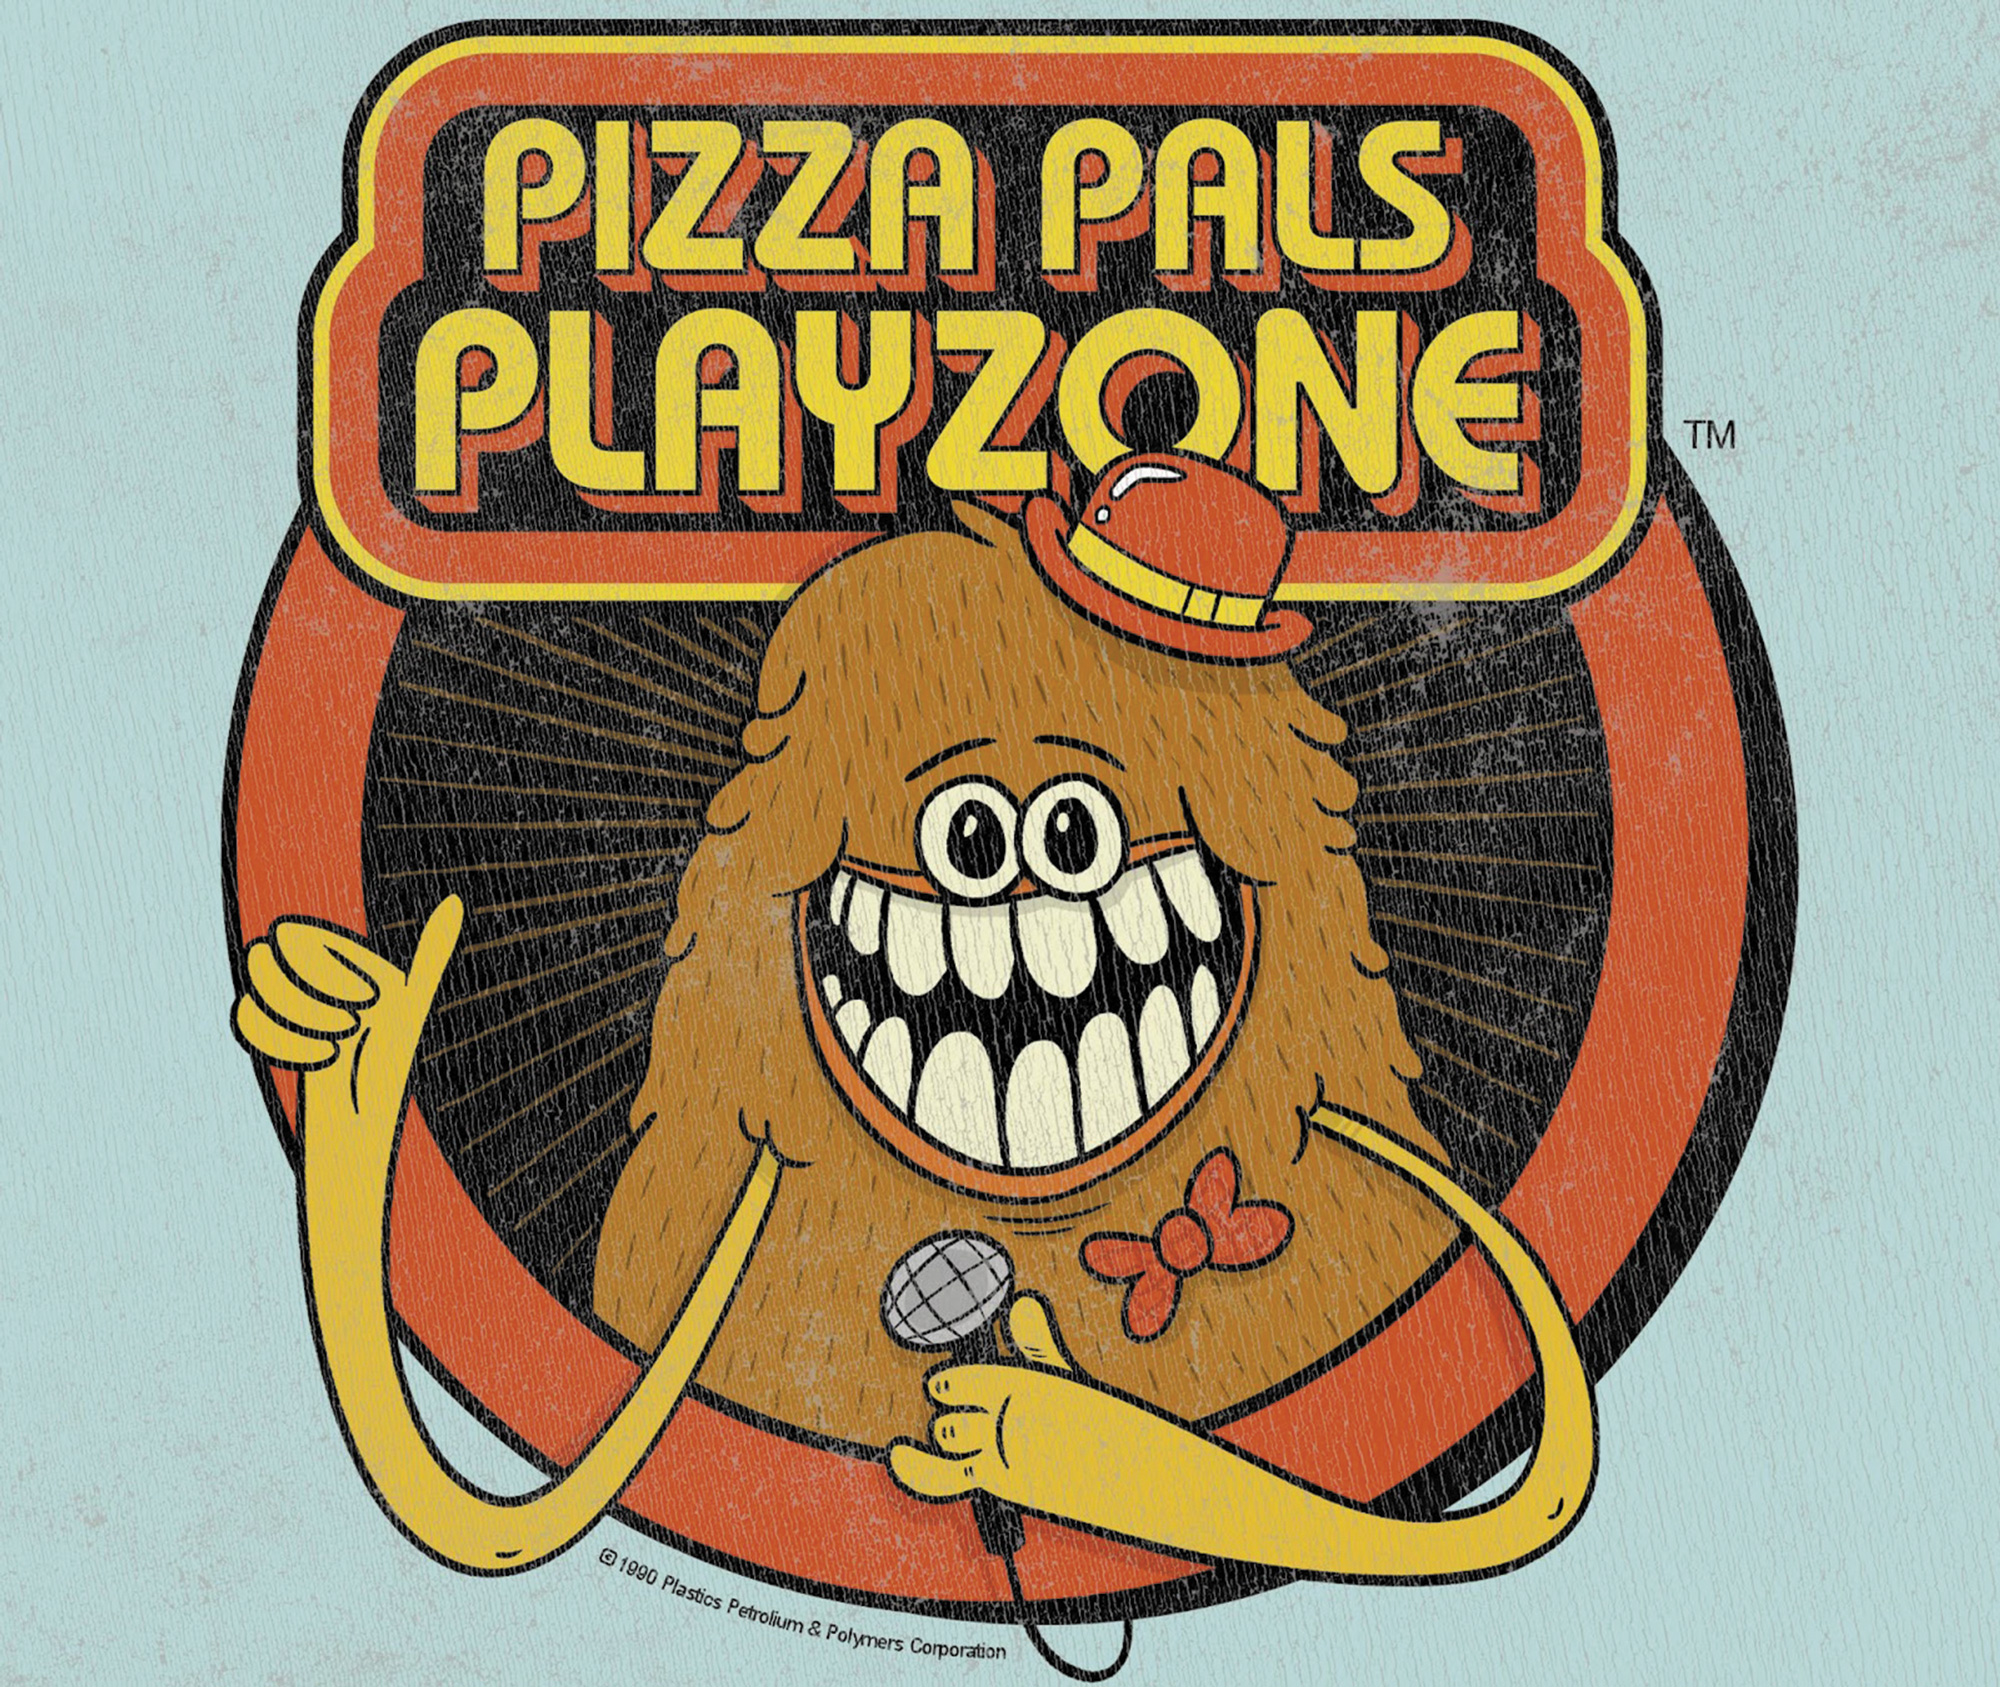 Photo-by-Jim-Newberry_Pizza-Pals-Playzone-shirt